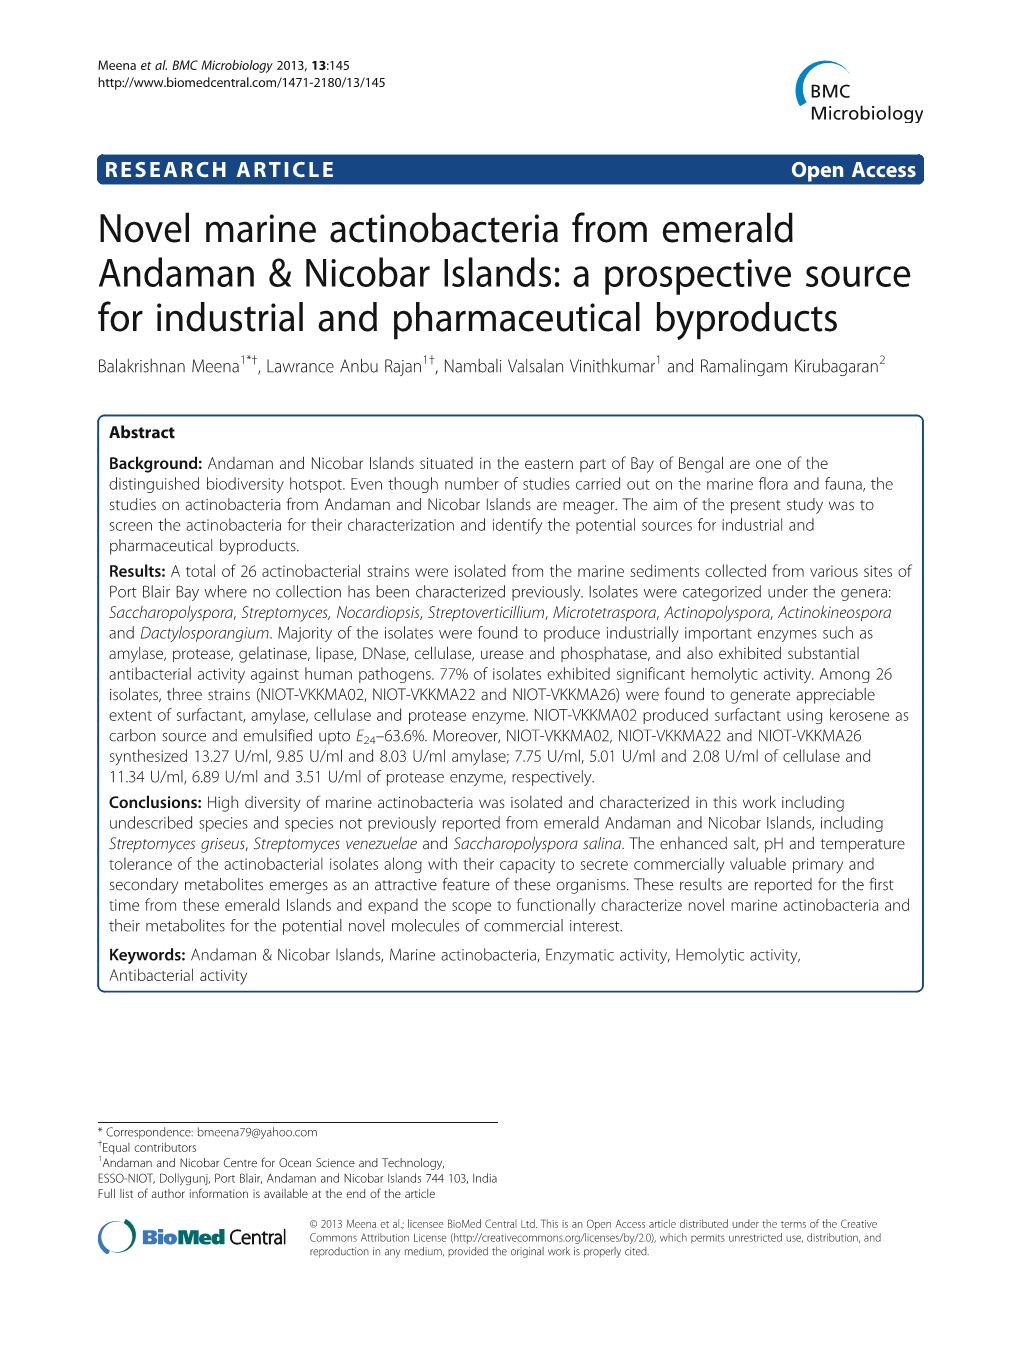 Novel Marine Actinobacteria from Emerald Andaman & Nicobar Islands